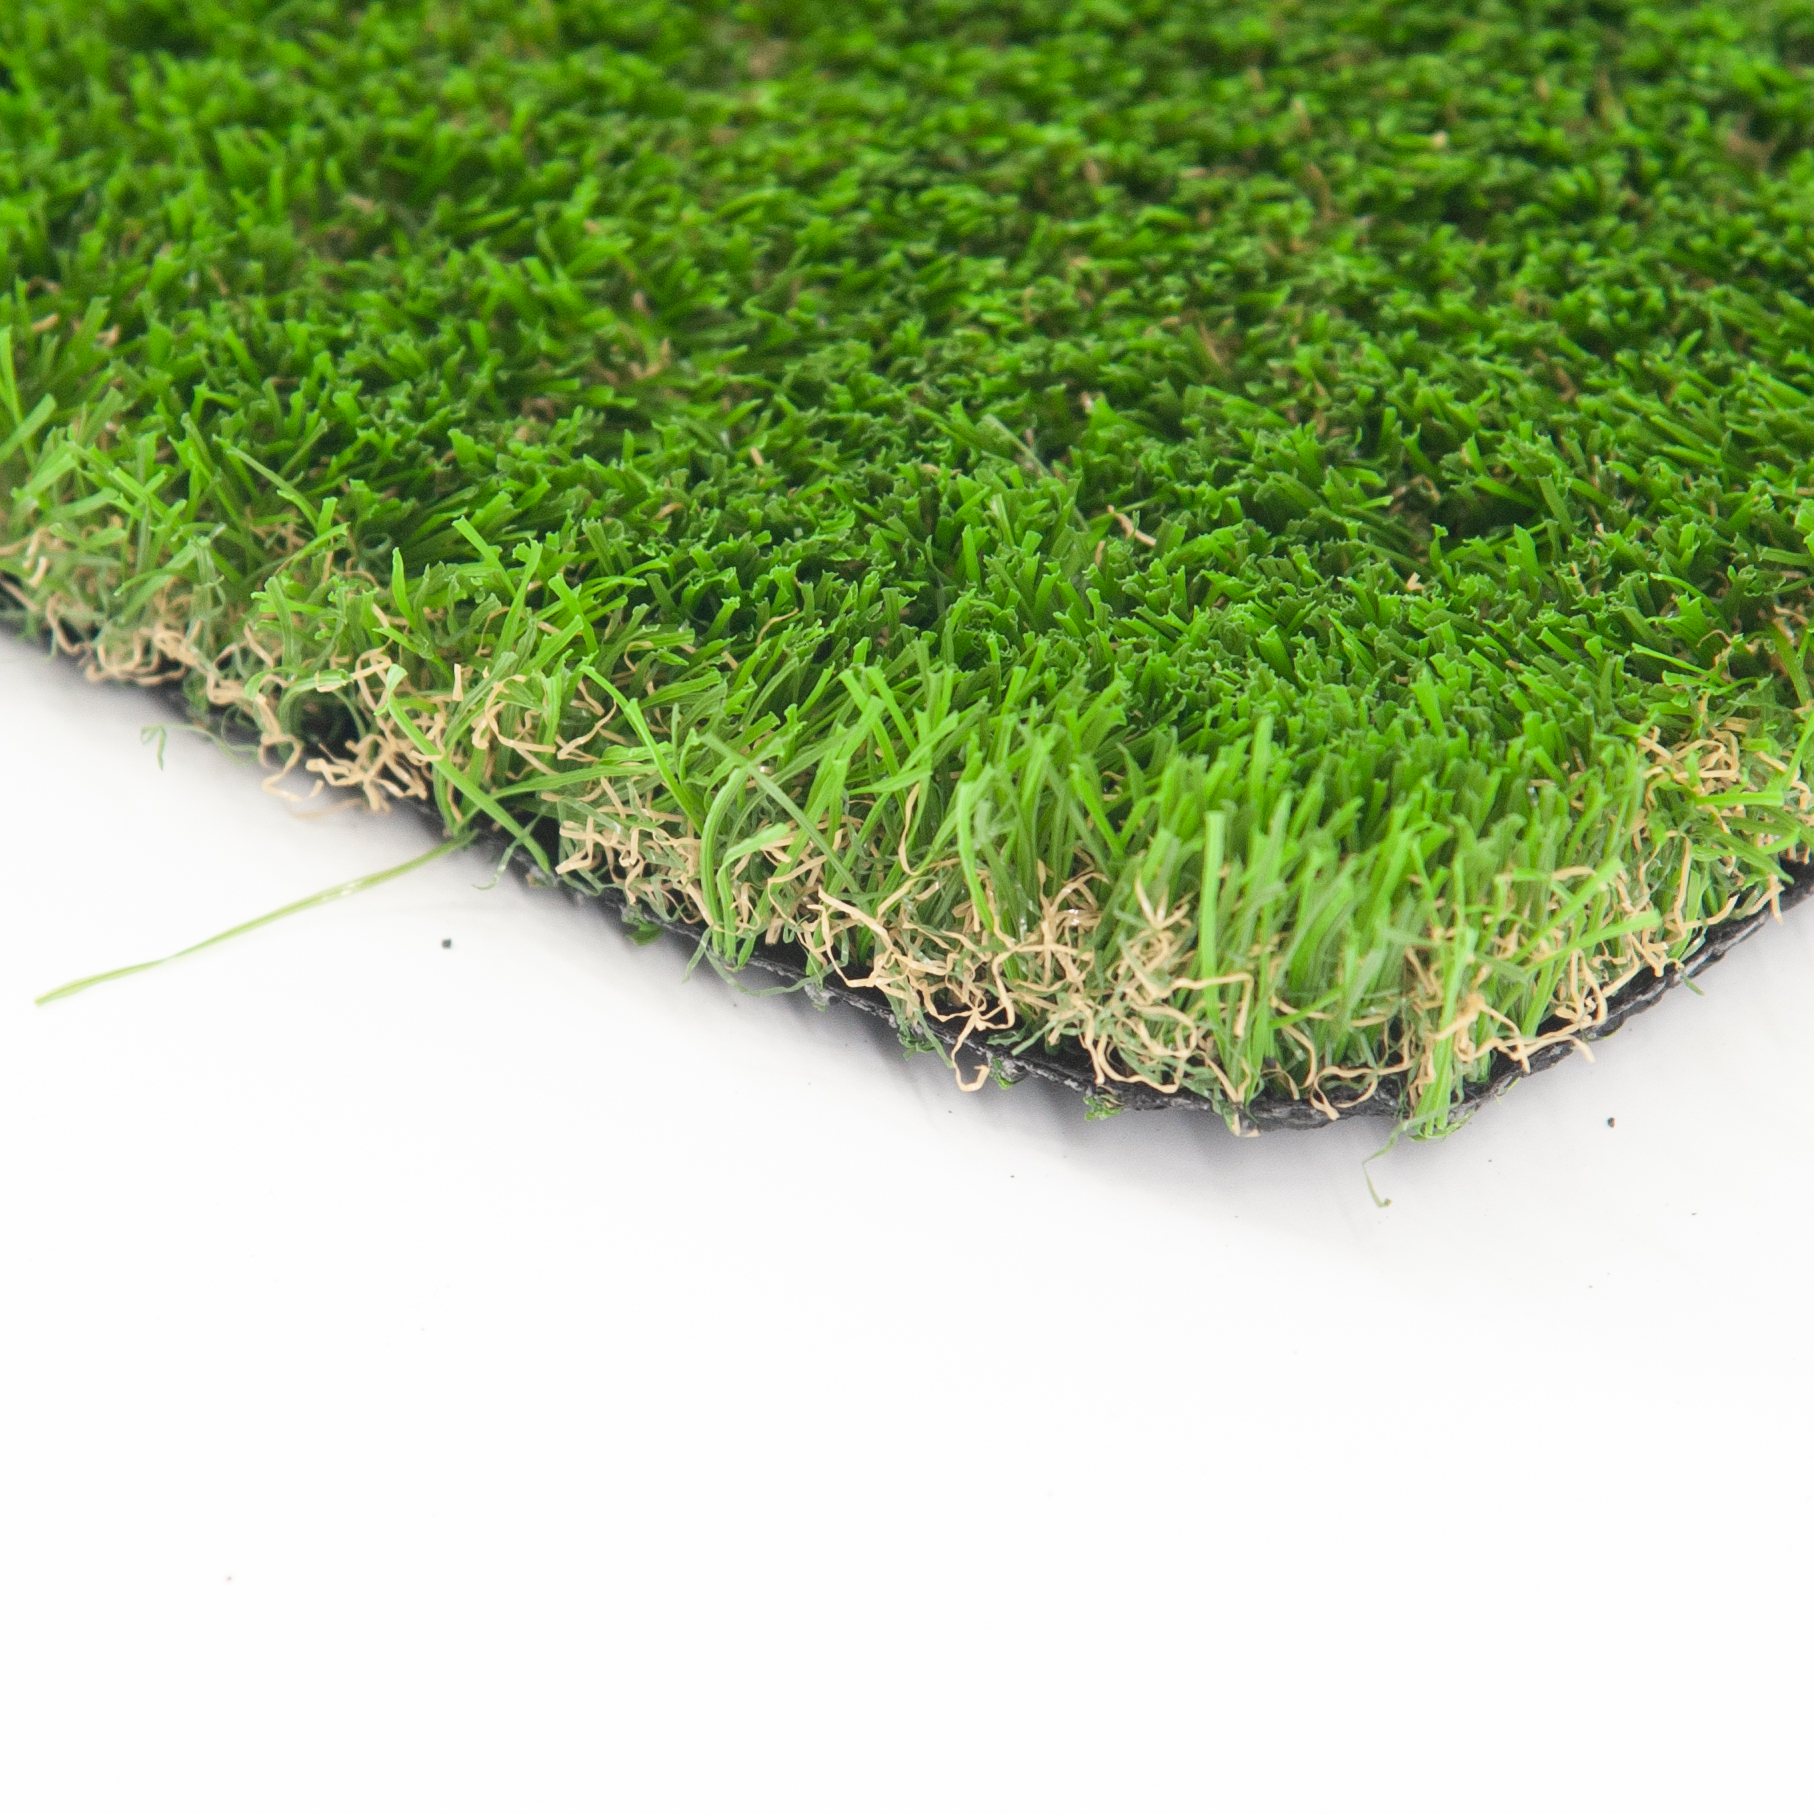 10mm High Quality Artificial Grass for backyard